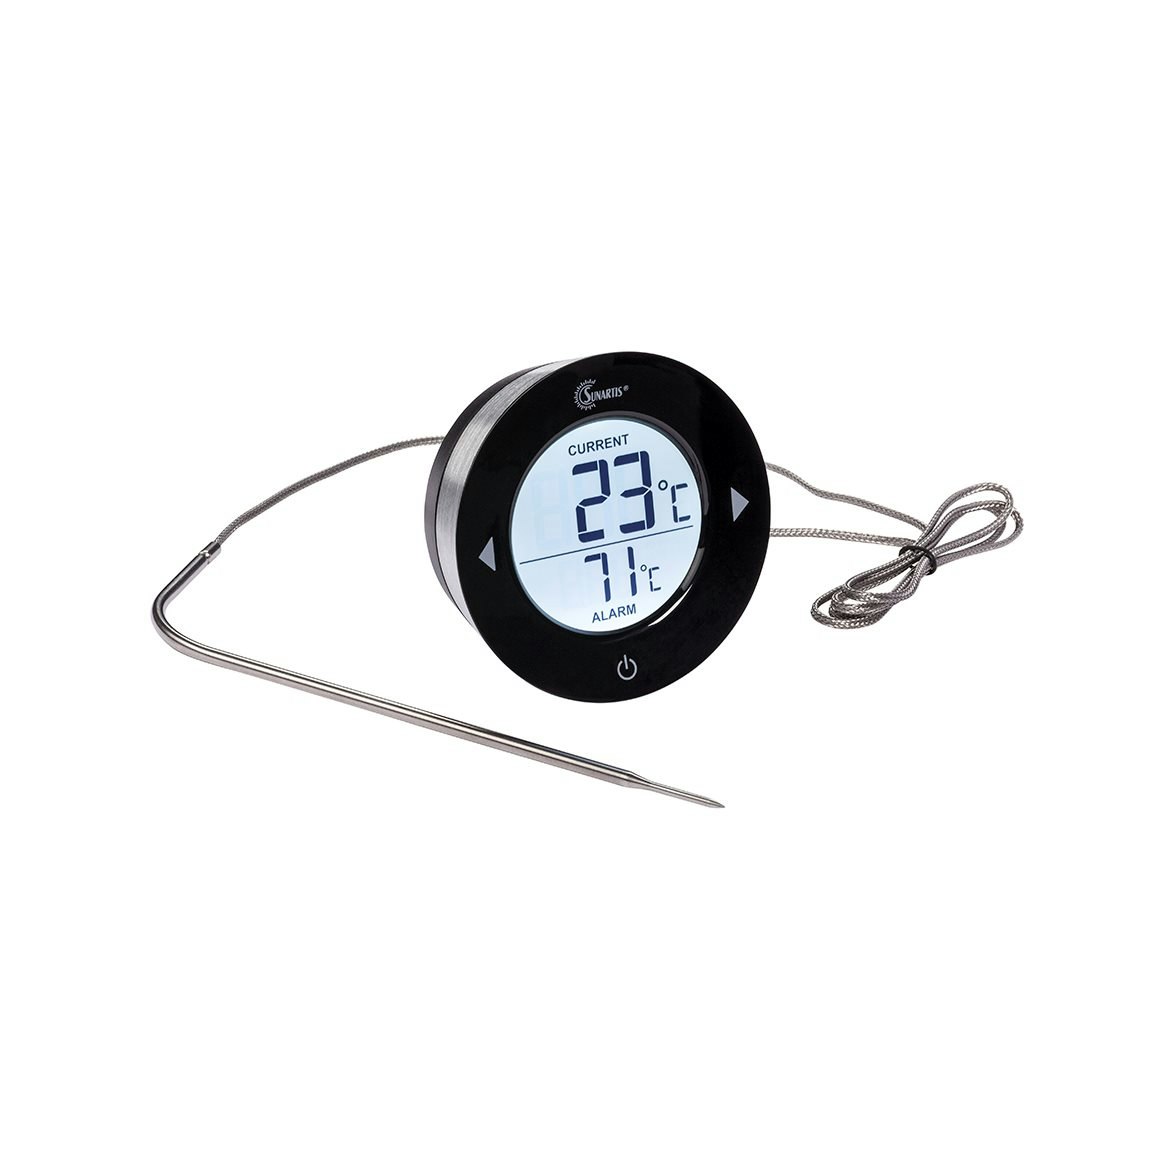 https://royaldesign.com/image/2/mingle-mingle-digital-oven-thermometer-1?w=800&quality=80